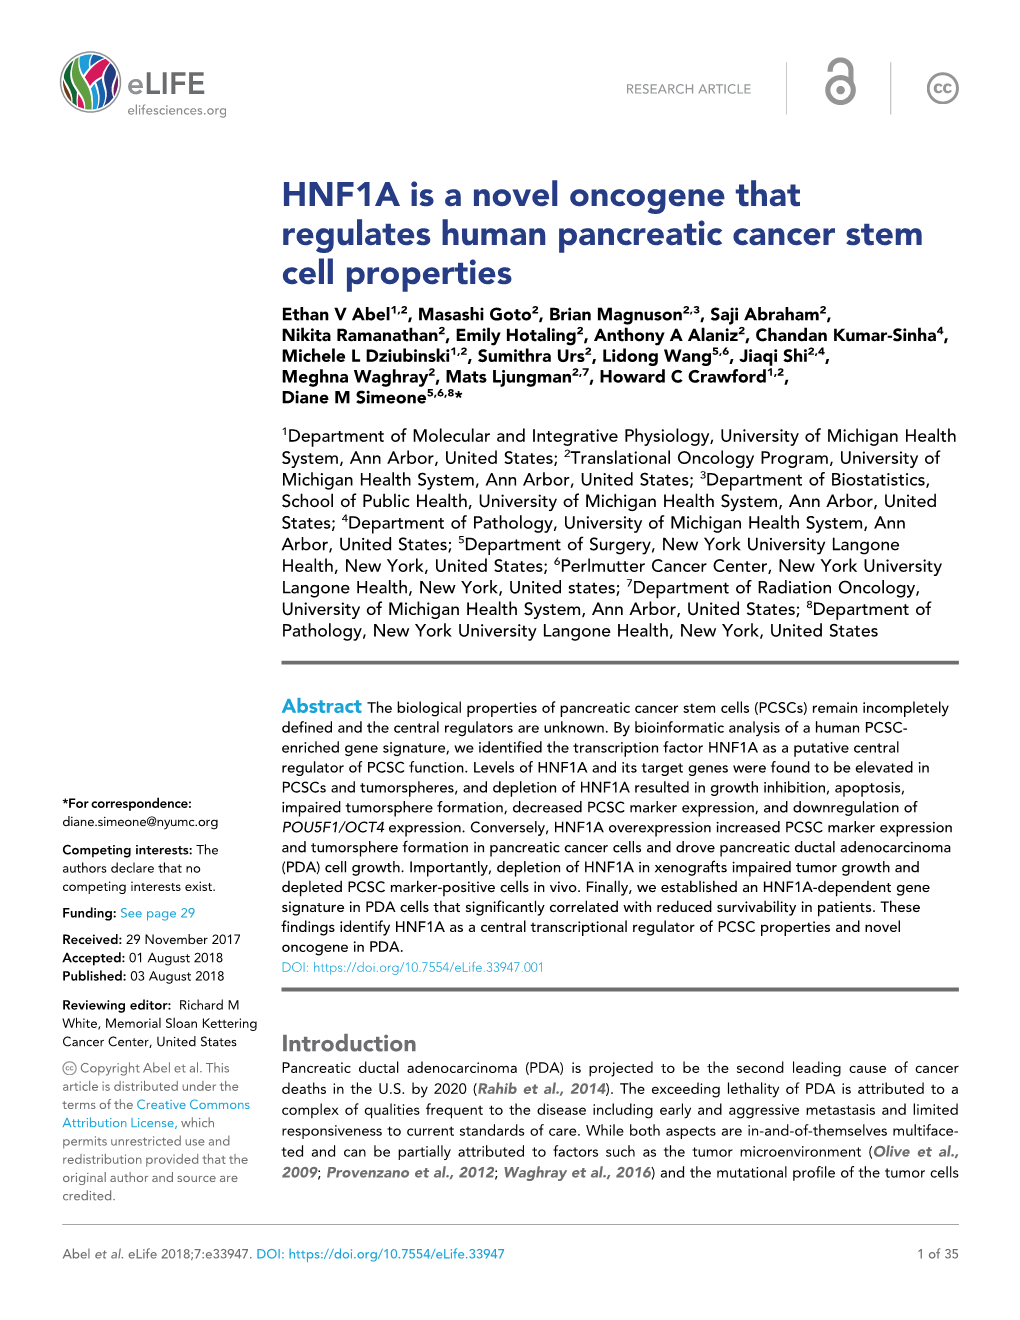 HNF1A Is a Novel Oncogene That Regulates Human Pancreatic Cancer